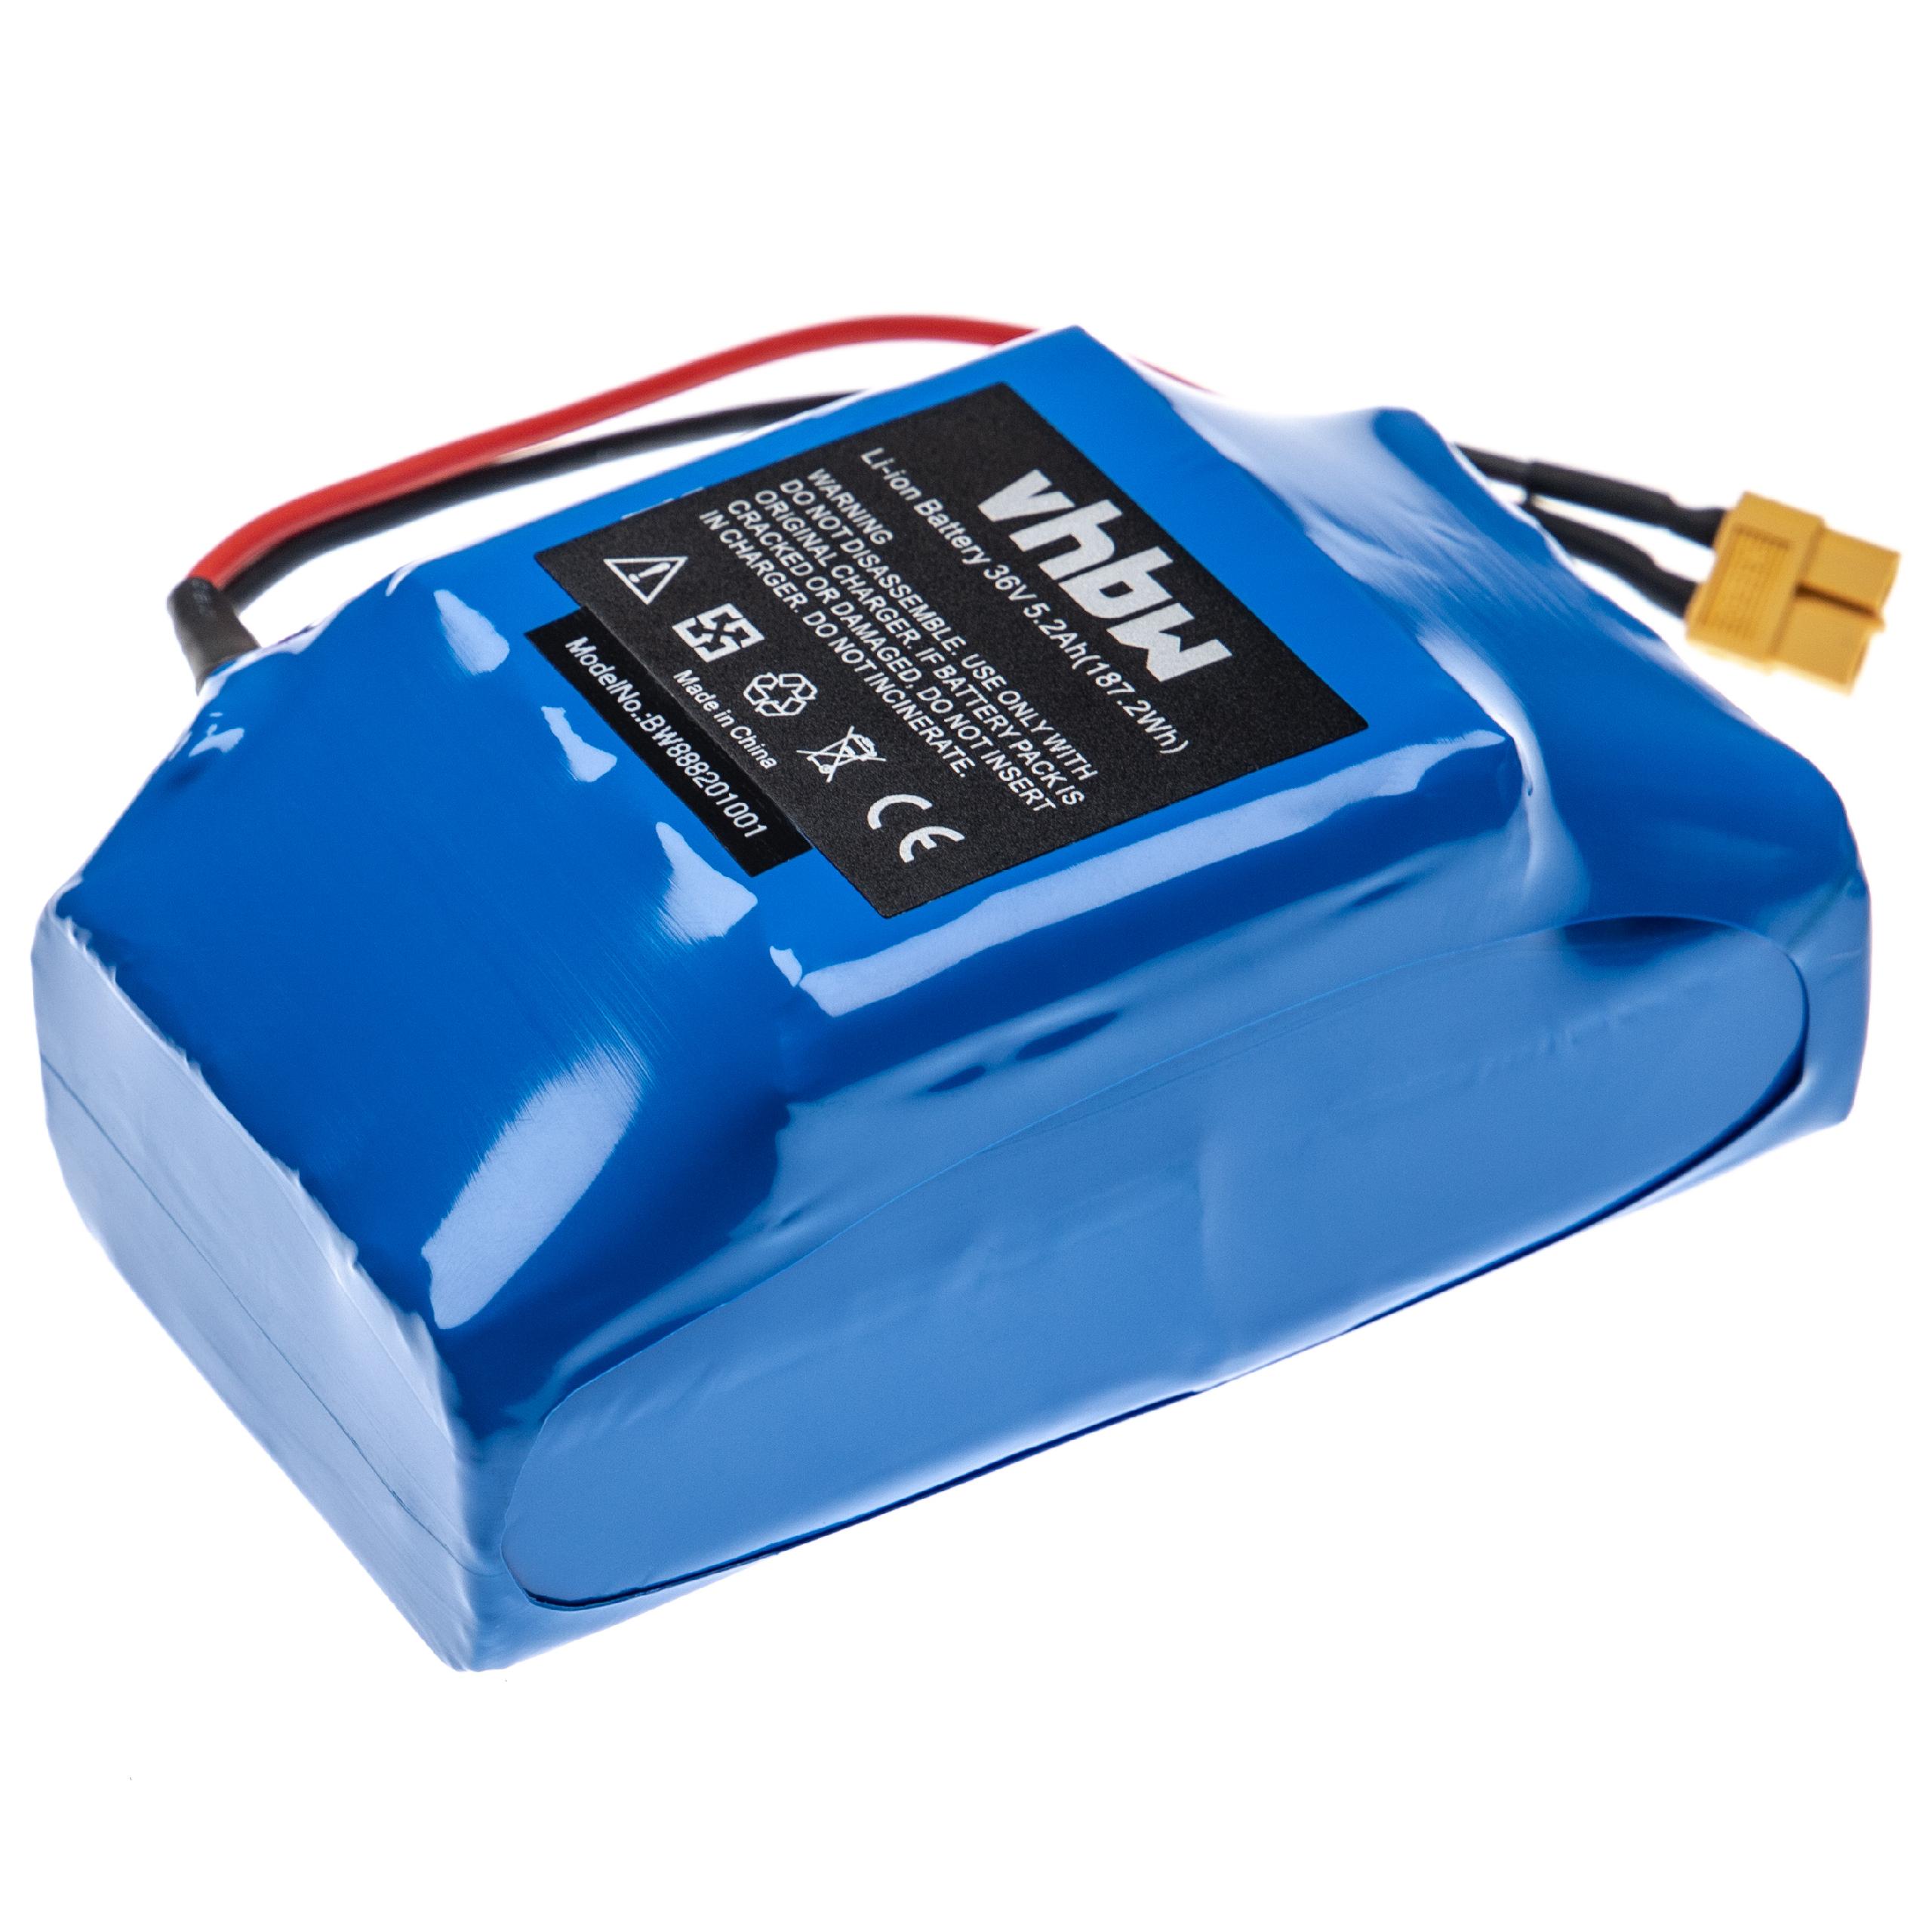 E-Board Battery Replacement for Bluewheel 10IXR19/65-2, HPK-11 - 5200mAh 36V Li-Ion